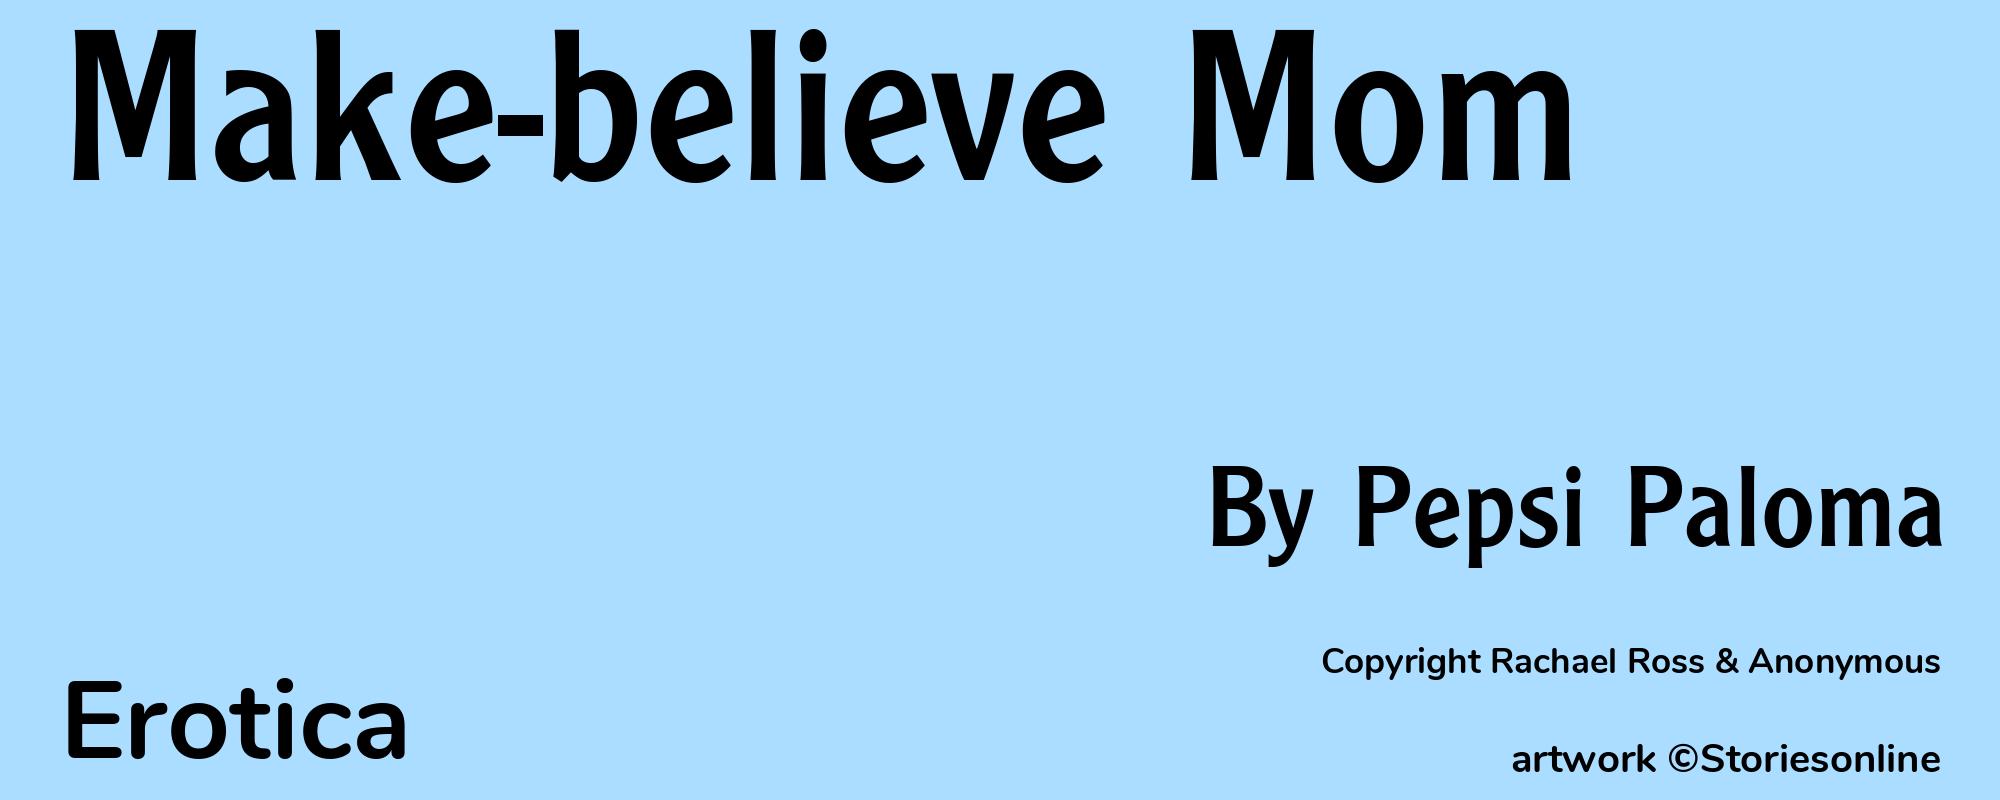 Make-believe Mom - Cover